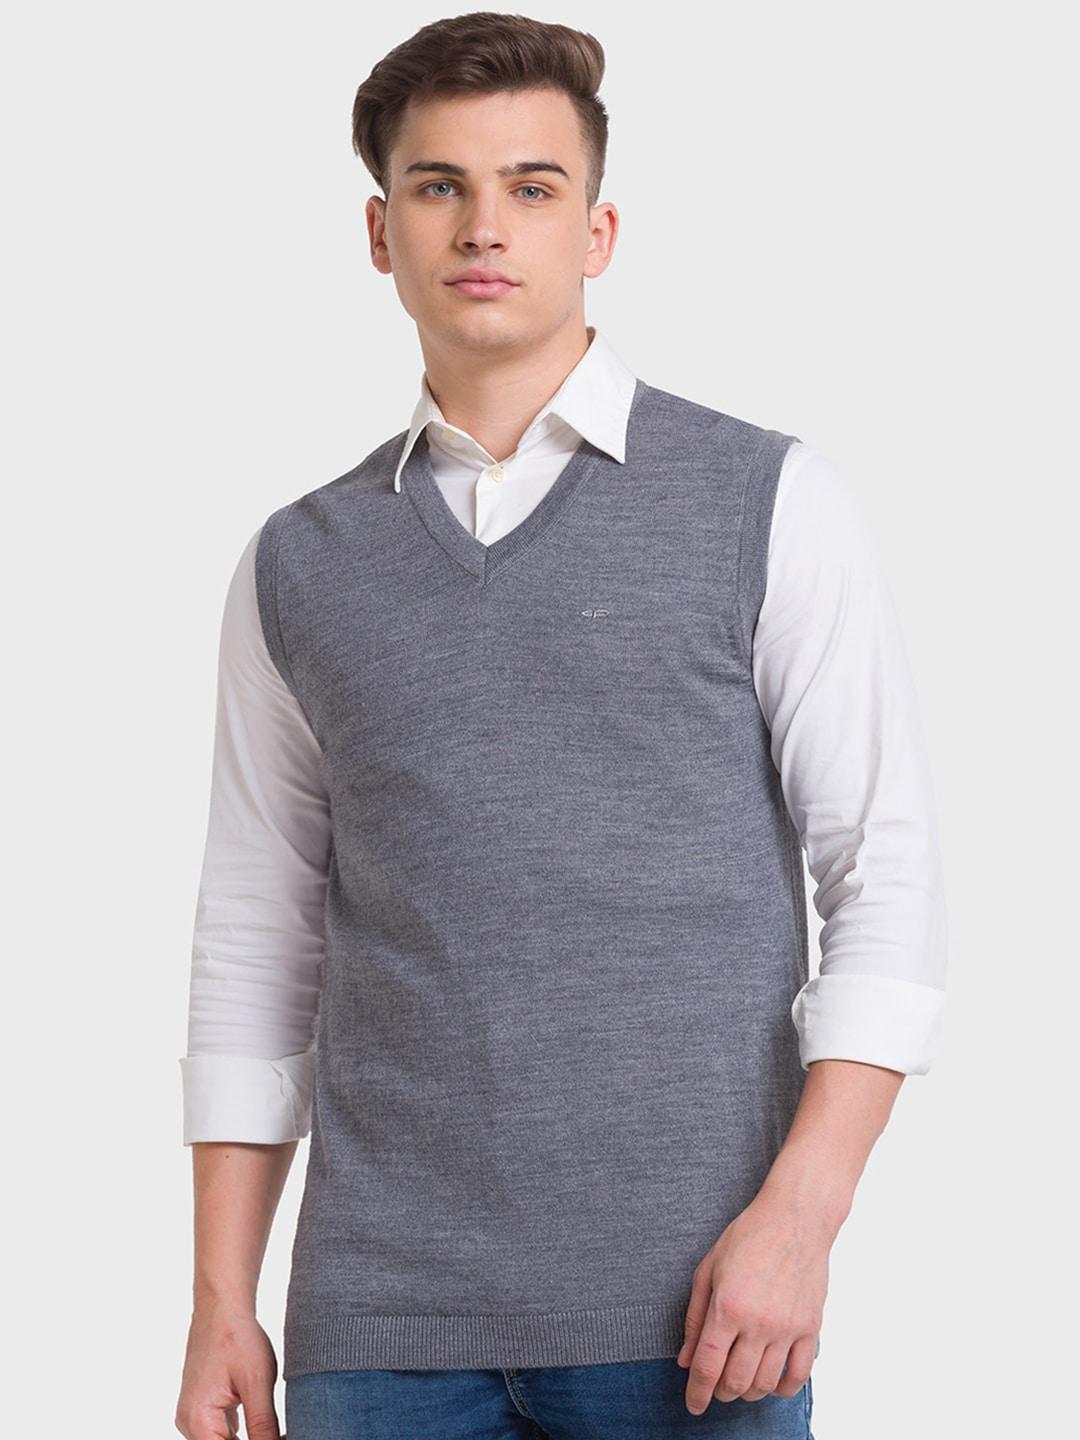 colorplus-men-sweater-wool-vest